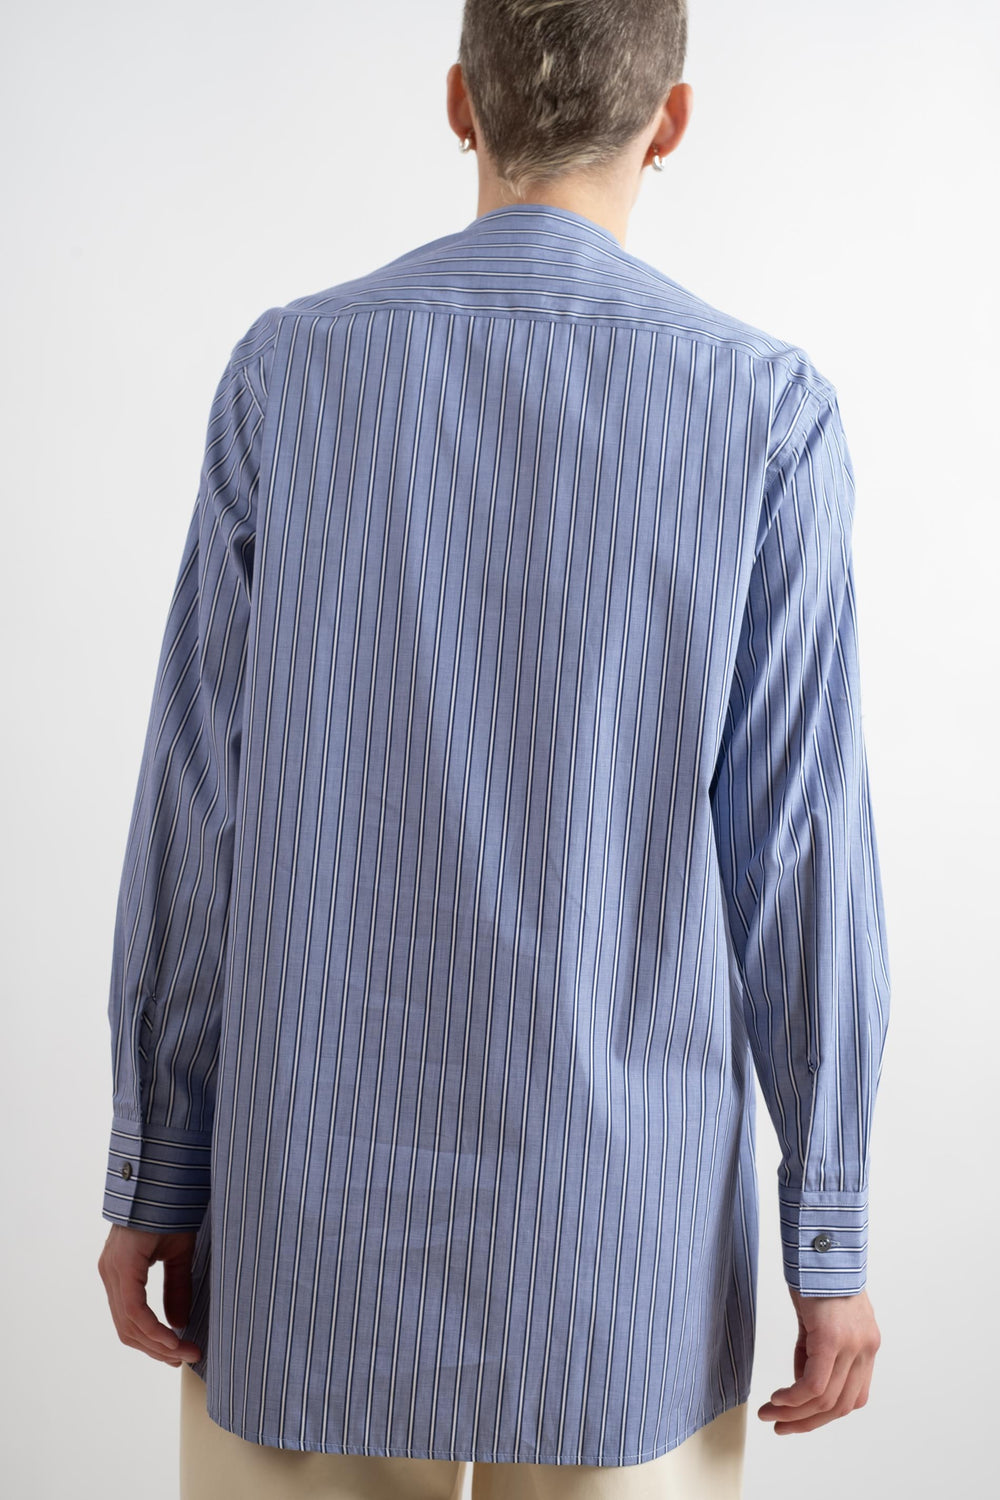 Noland Longline Shirt In Blue Multi